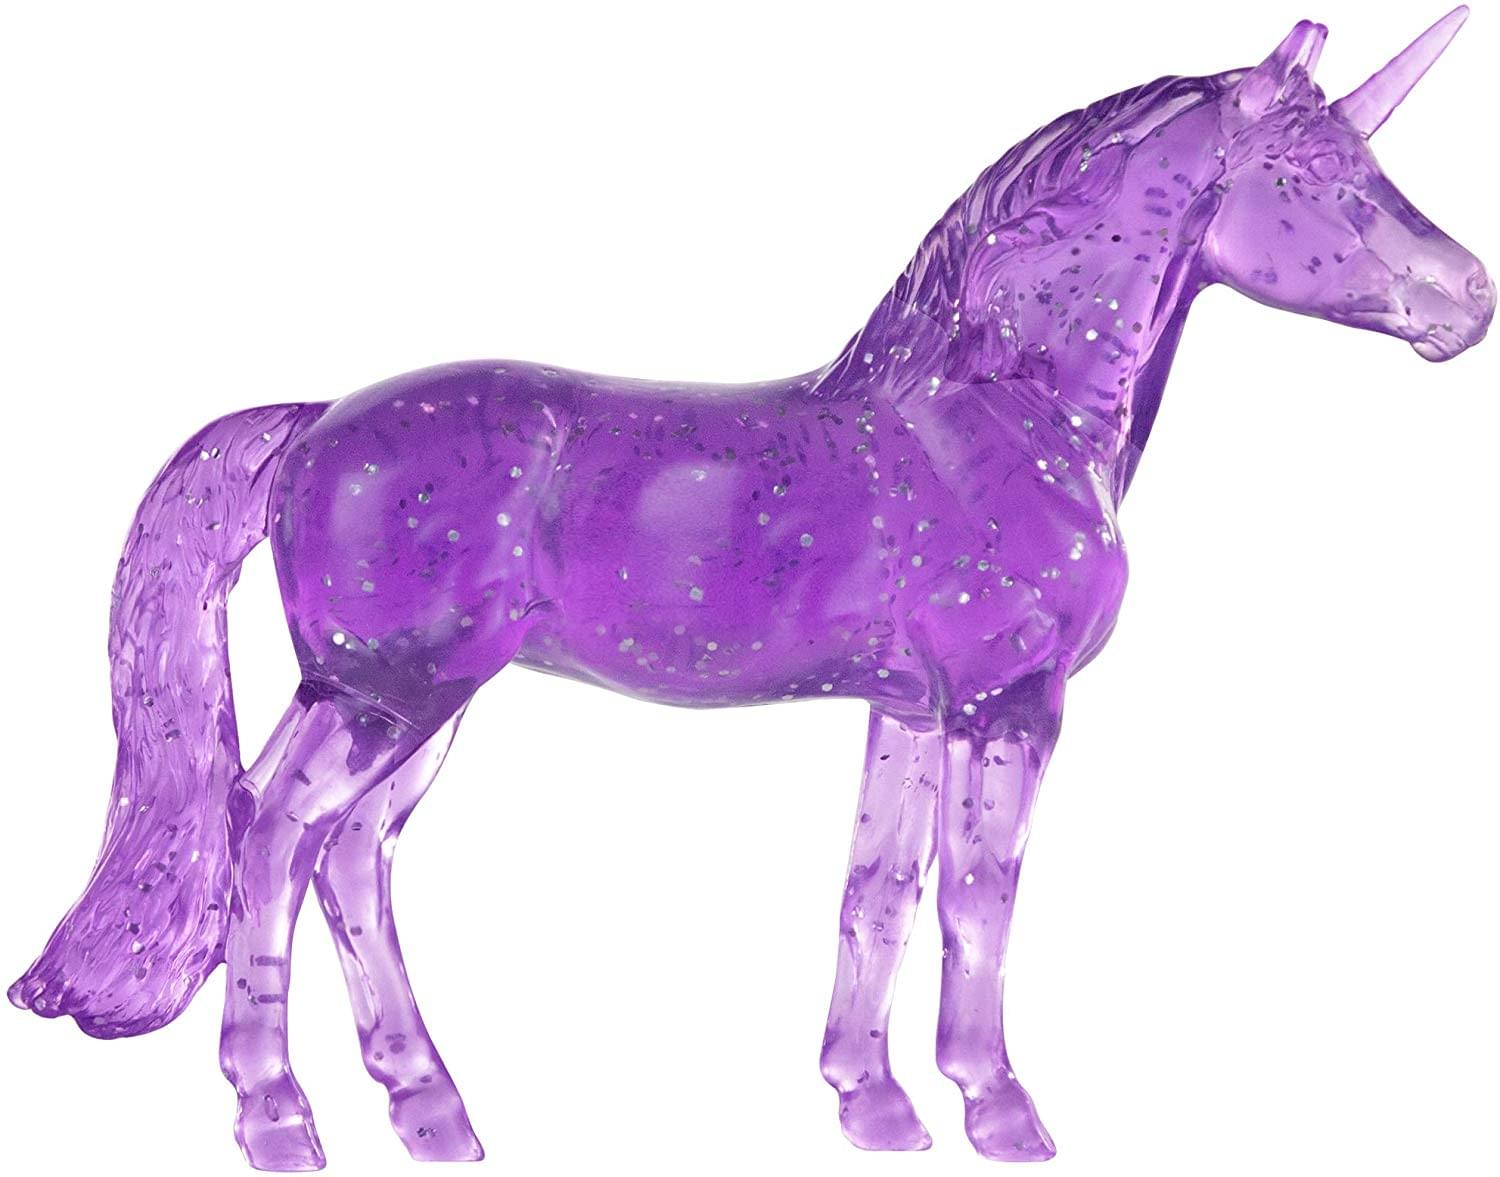 Breyer Stablemates 1:32 Scale Glitter Unicorns Gift Set of 4